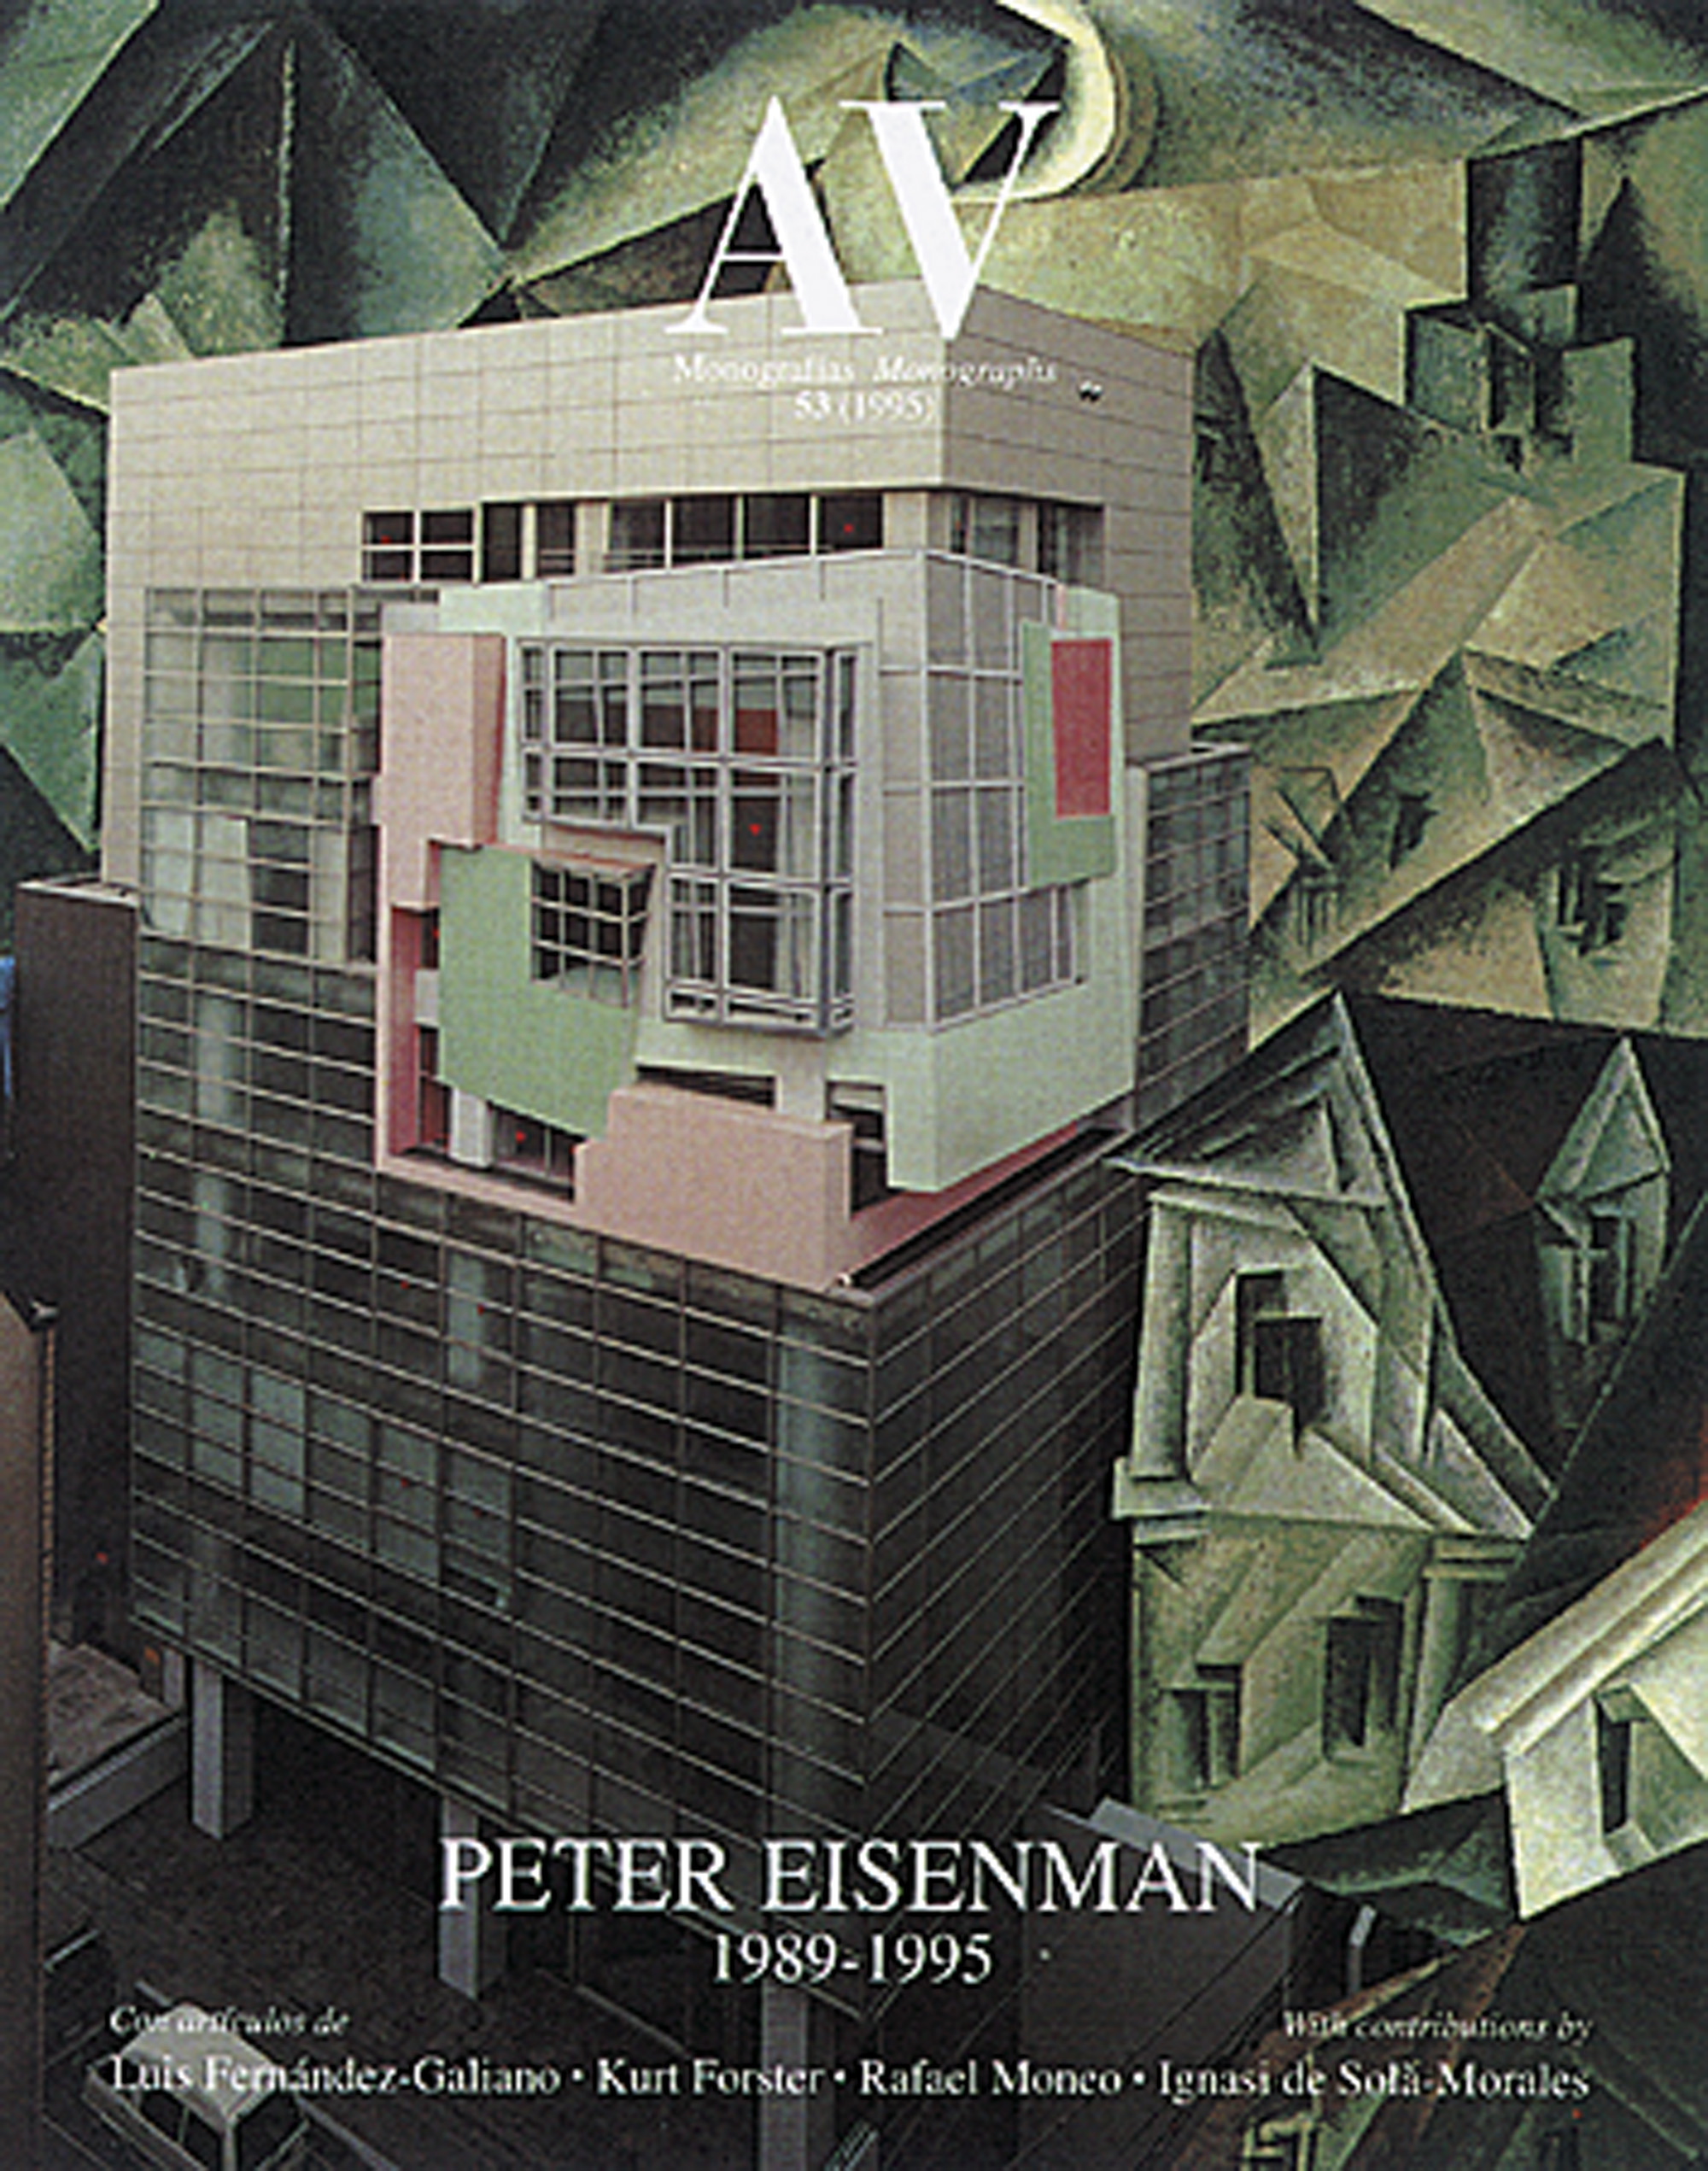 AV Monografías 53 - Peter Eisenman 1989-1995 | Arquitectura